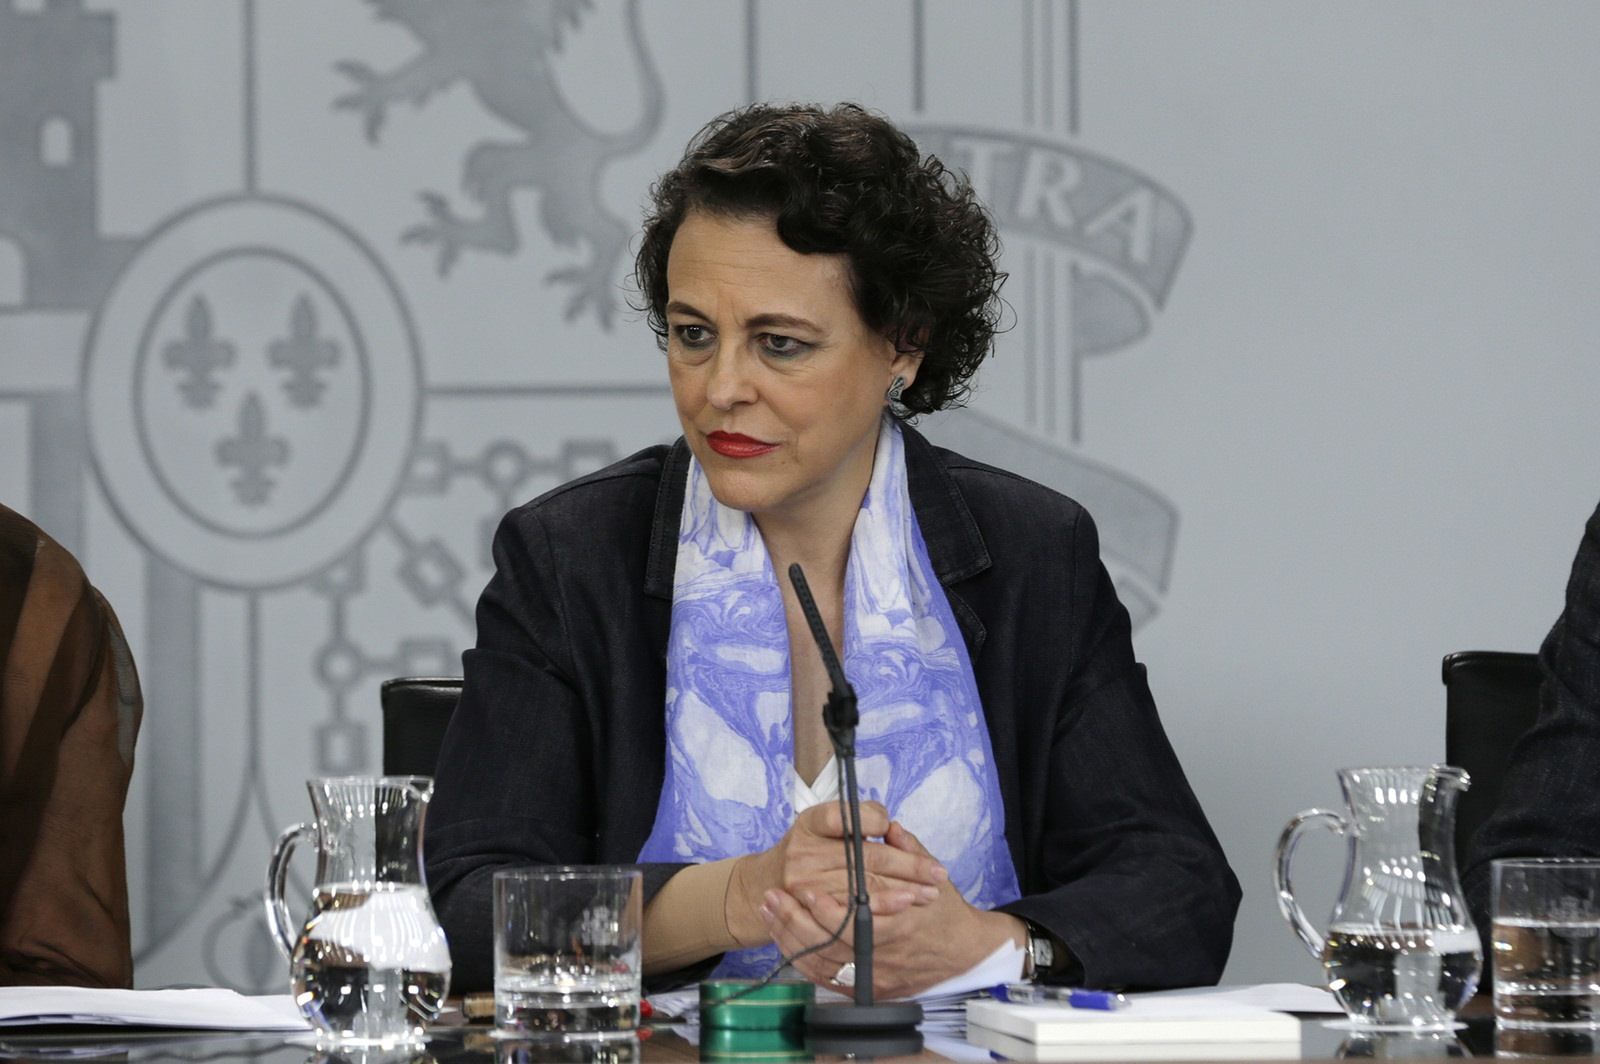 La ministra de Trabajo, Magdalena Valerio - Flickr Moncloa